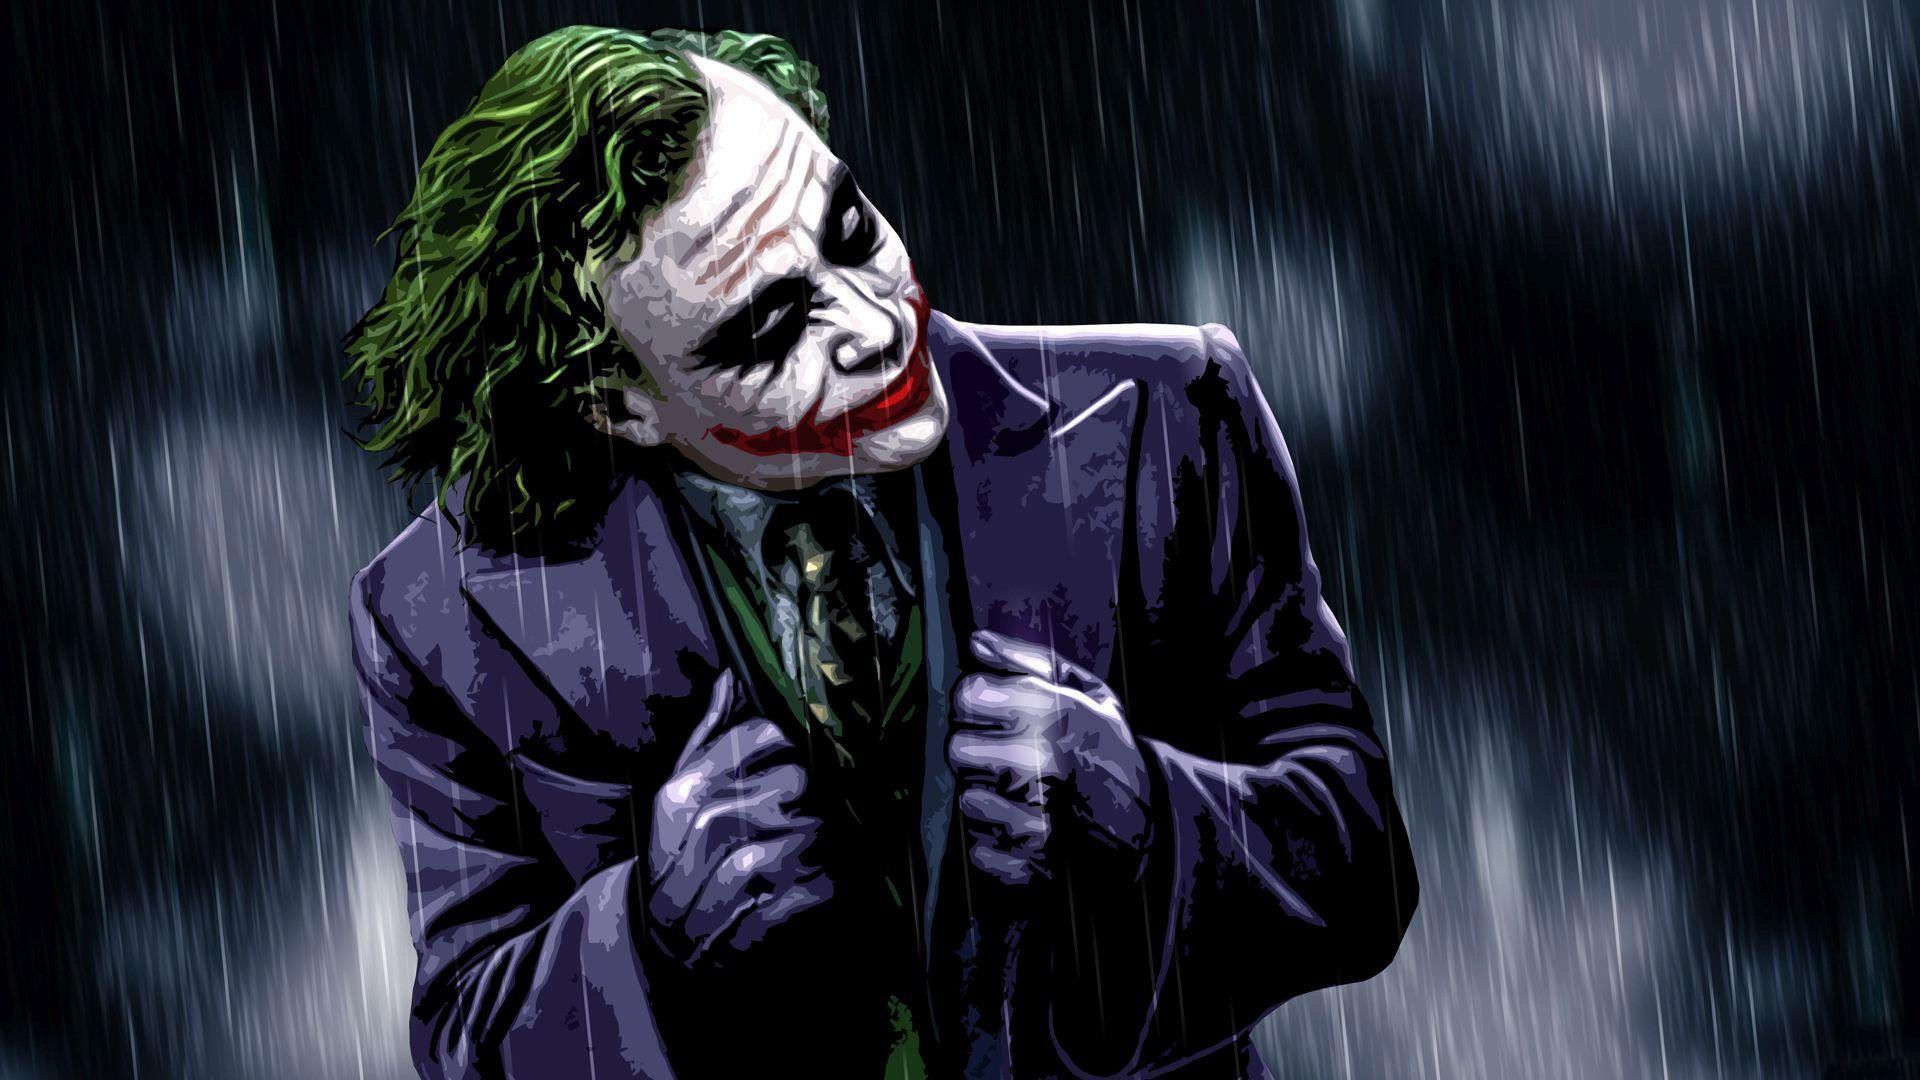 The Joker The Dark Knight Desktop fondo de pantalla Hd para teléfonos móviles y